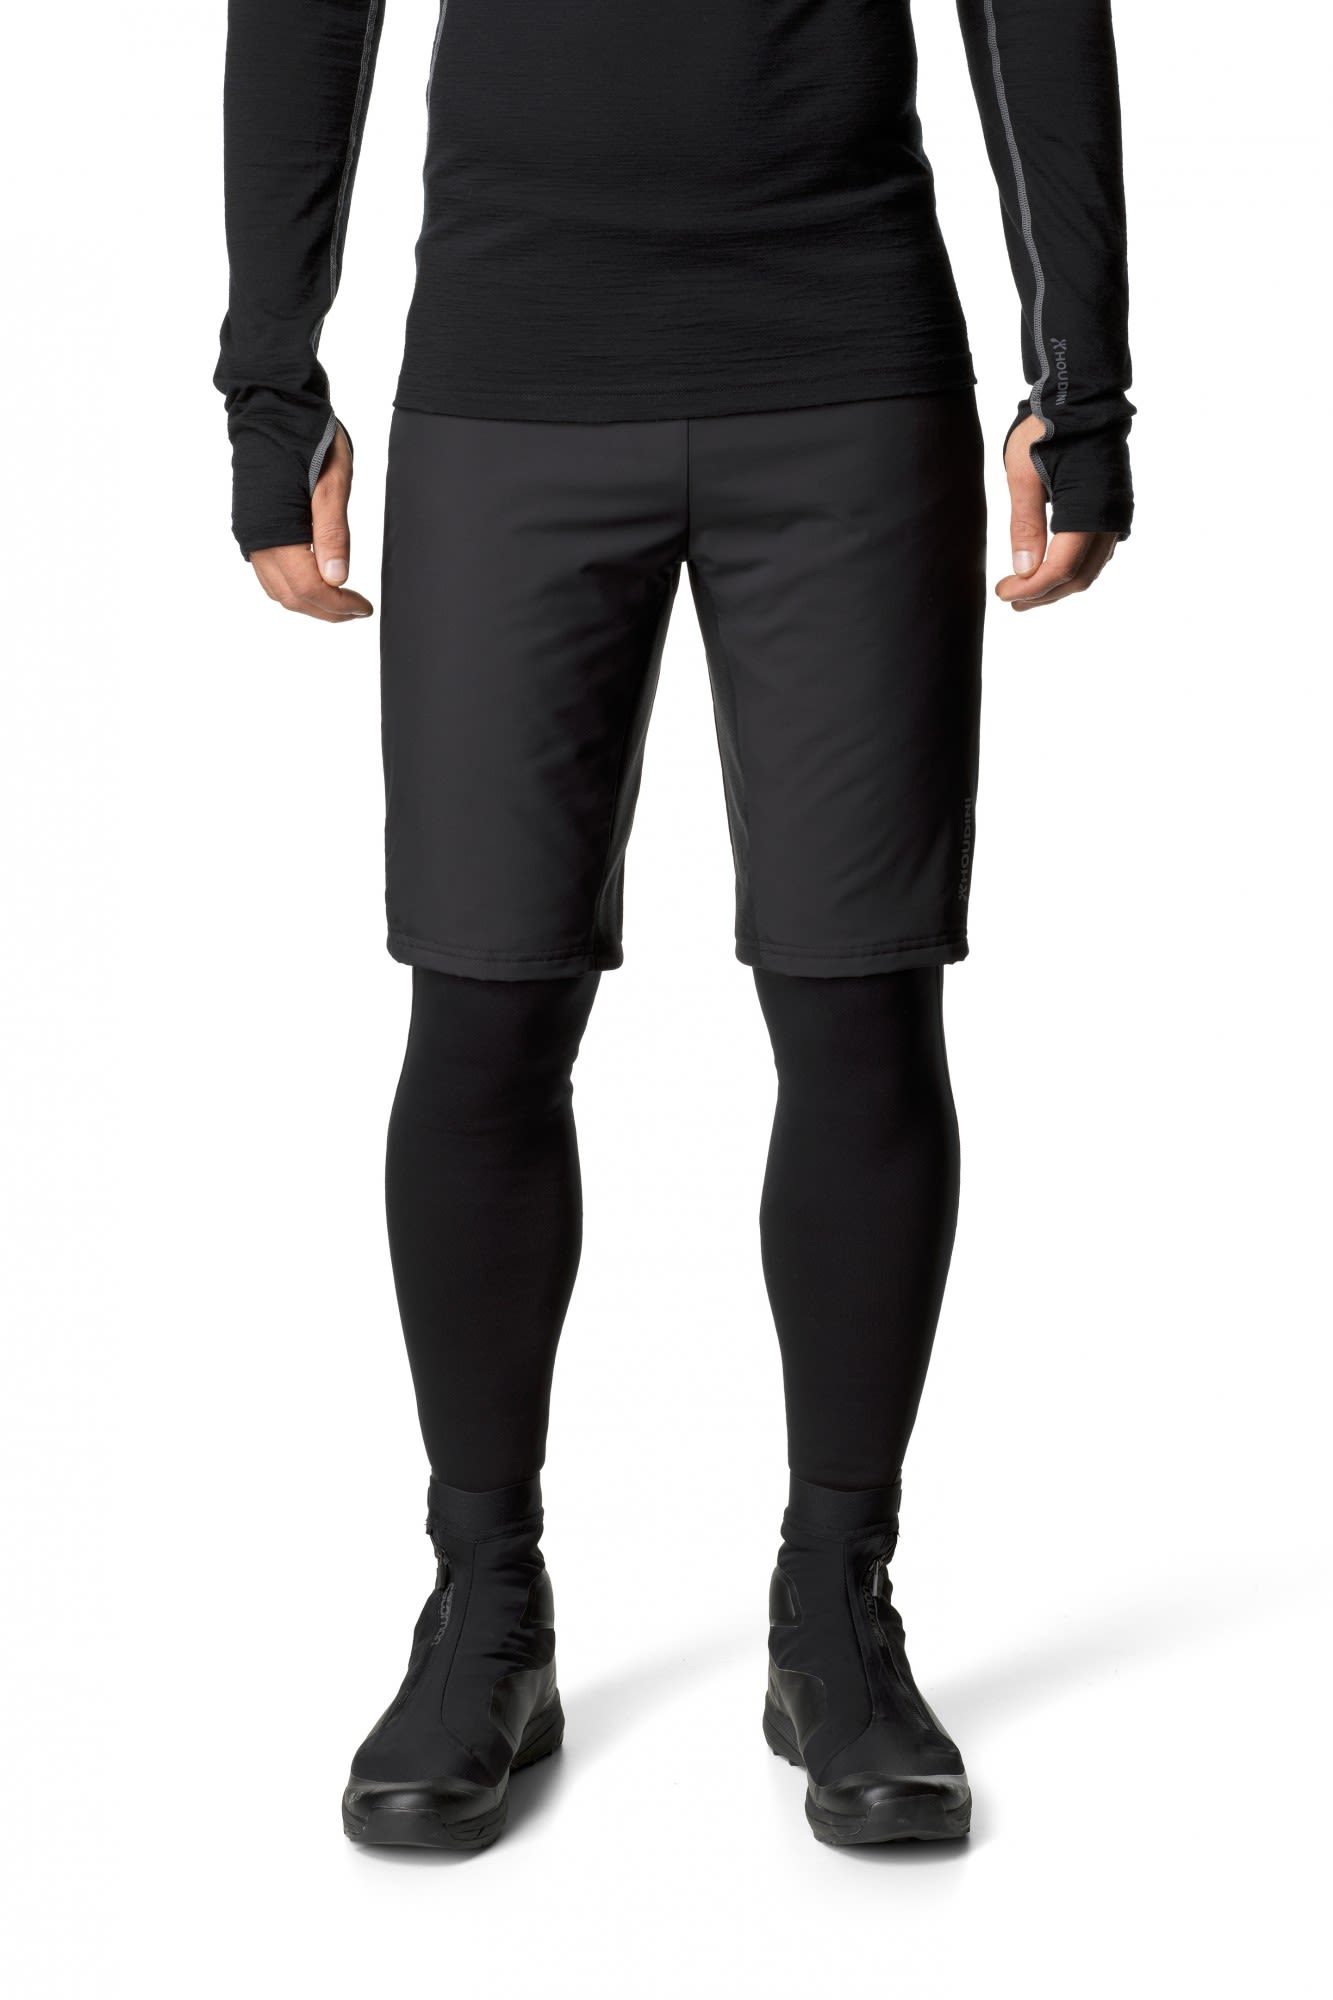 Houdini Moonwalk Shorts Schwarz- Male PrimaLoft(R) Hosen- Grsse S - Farbe True Black